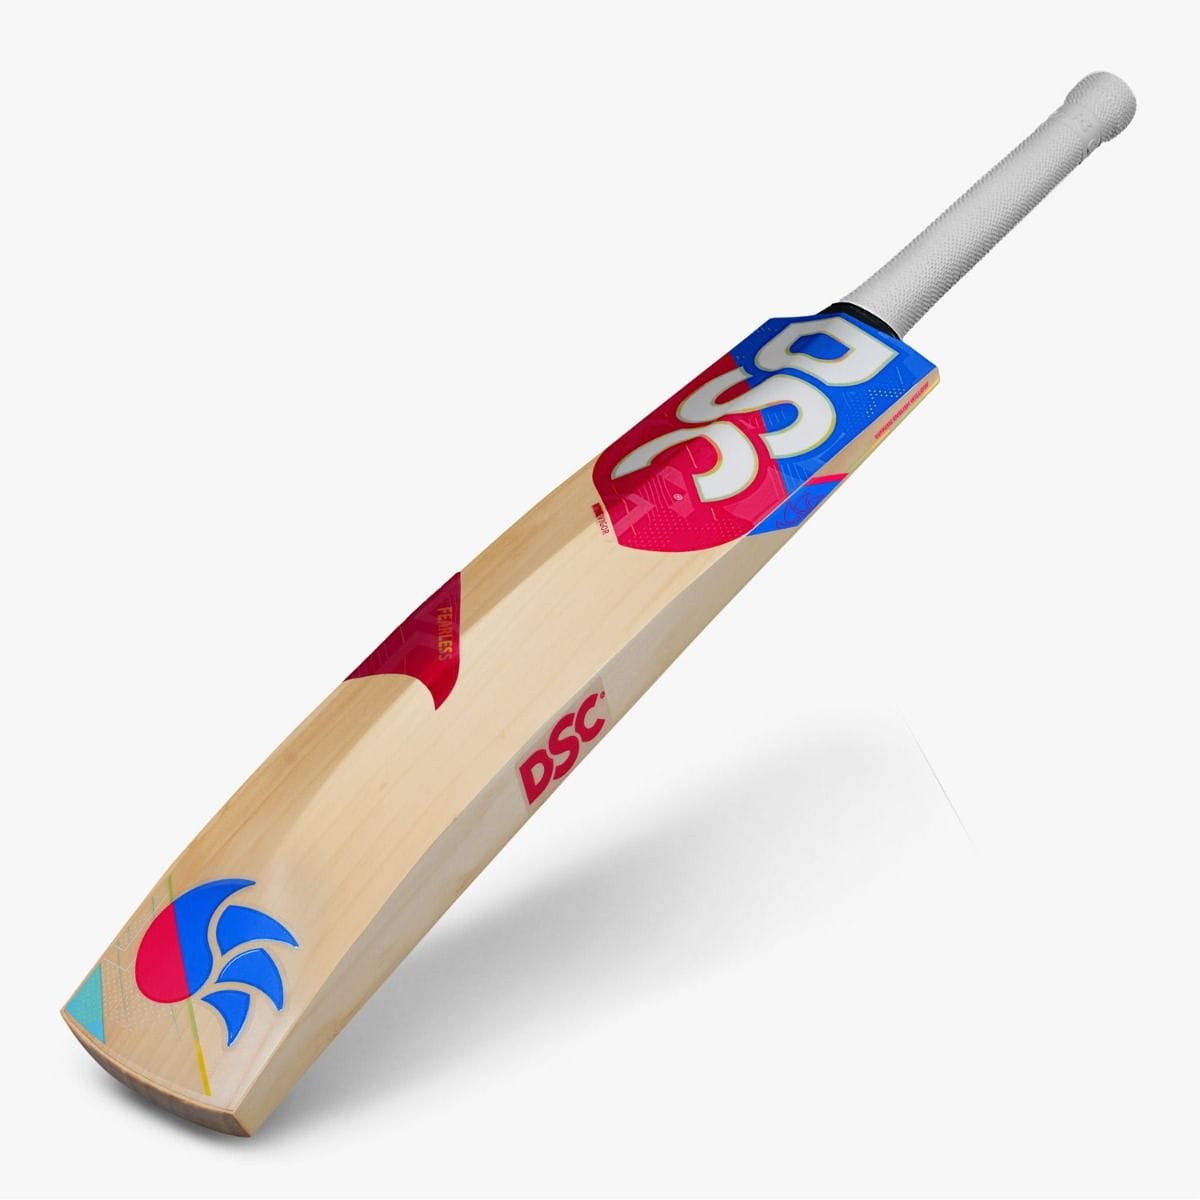 WSC Cricket Bats DSC Intense Vigor Adult Cricket Bat SH